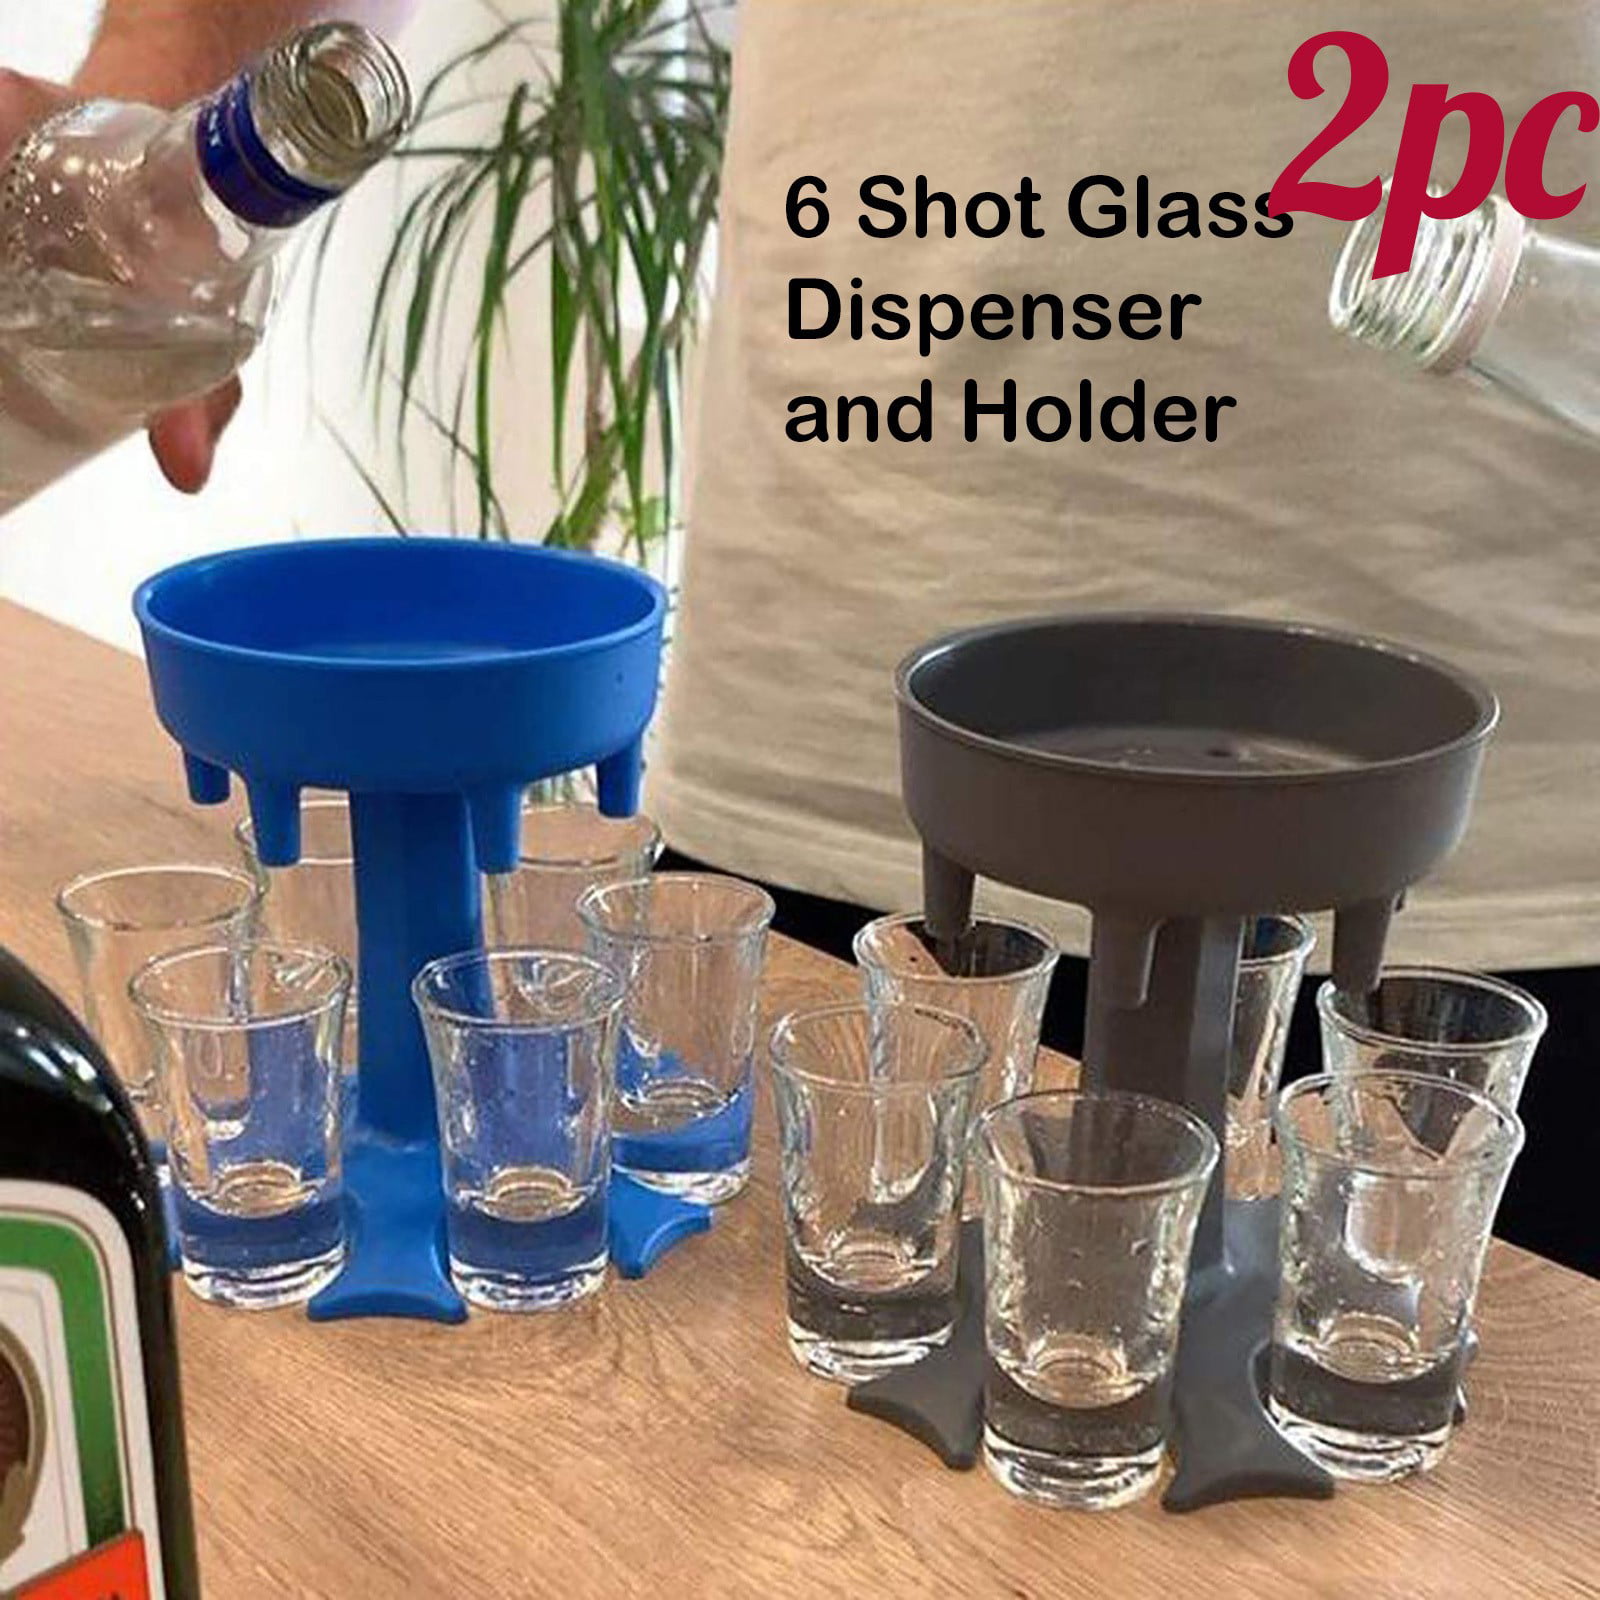 16 Shots Occasions 4 Drinks Parties Sub Zero Freezer Shot Glasses Glass 8 